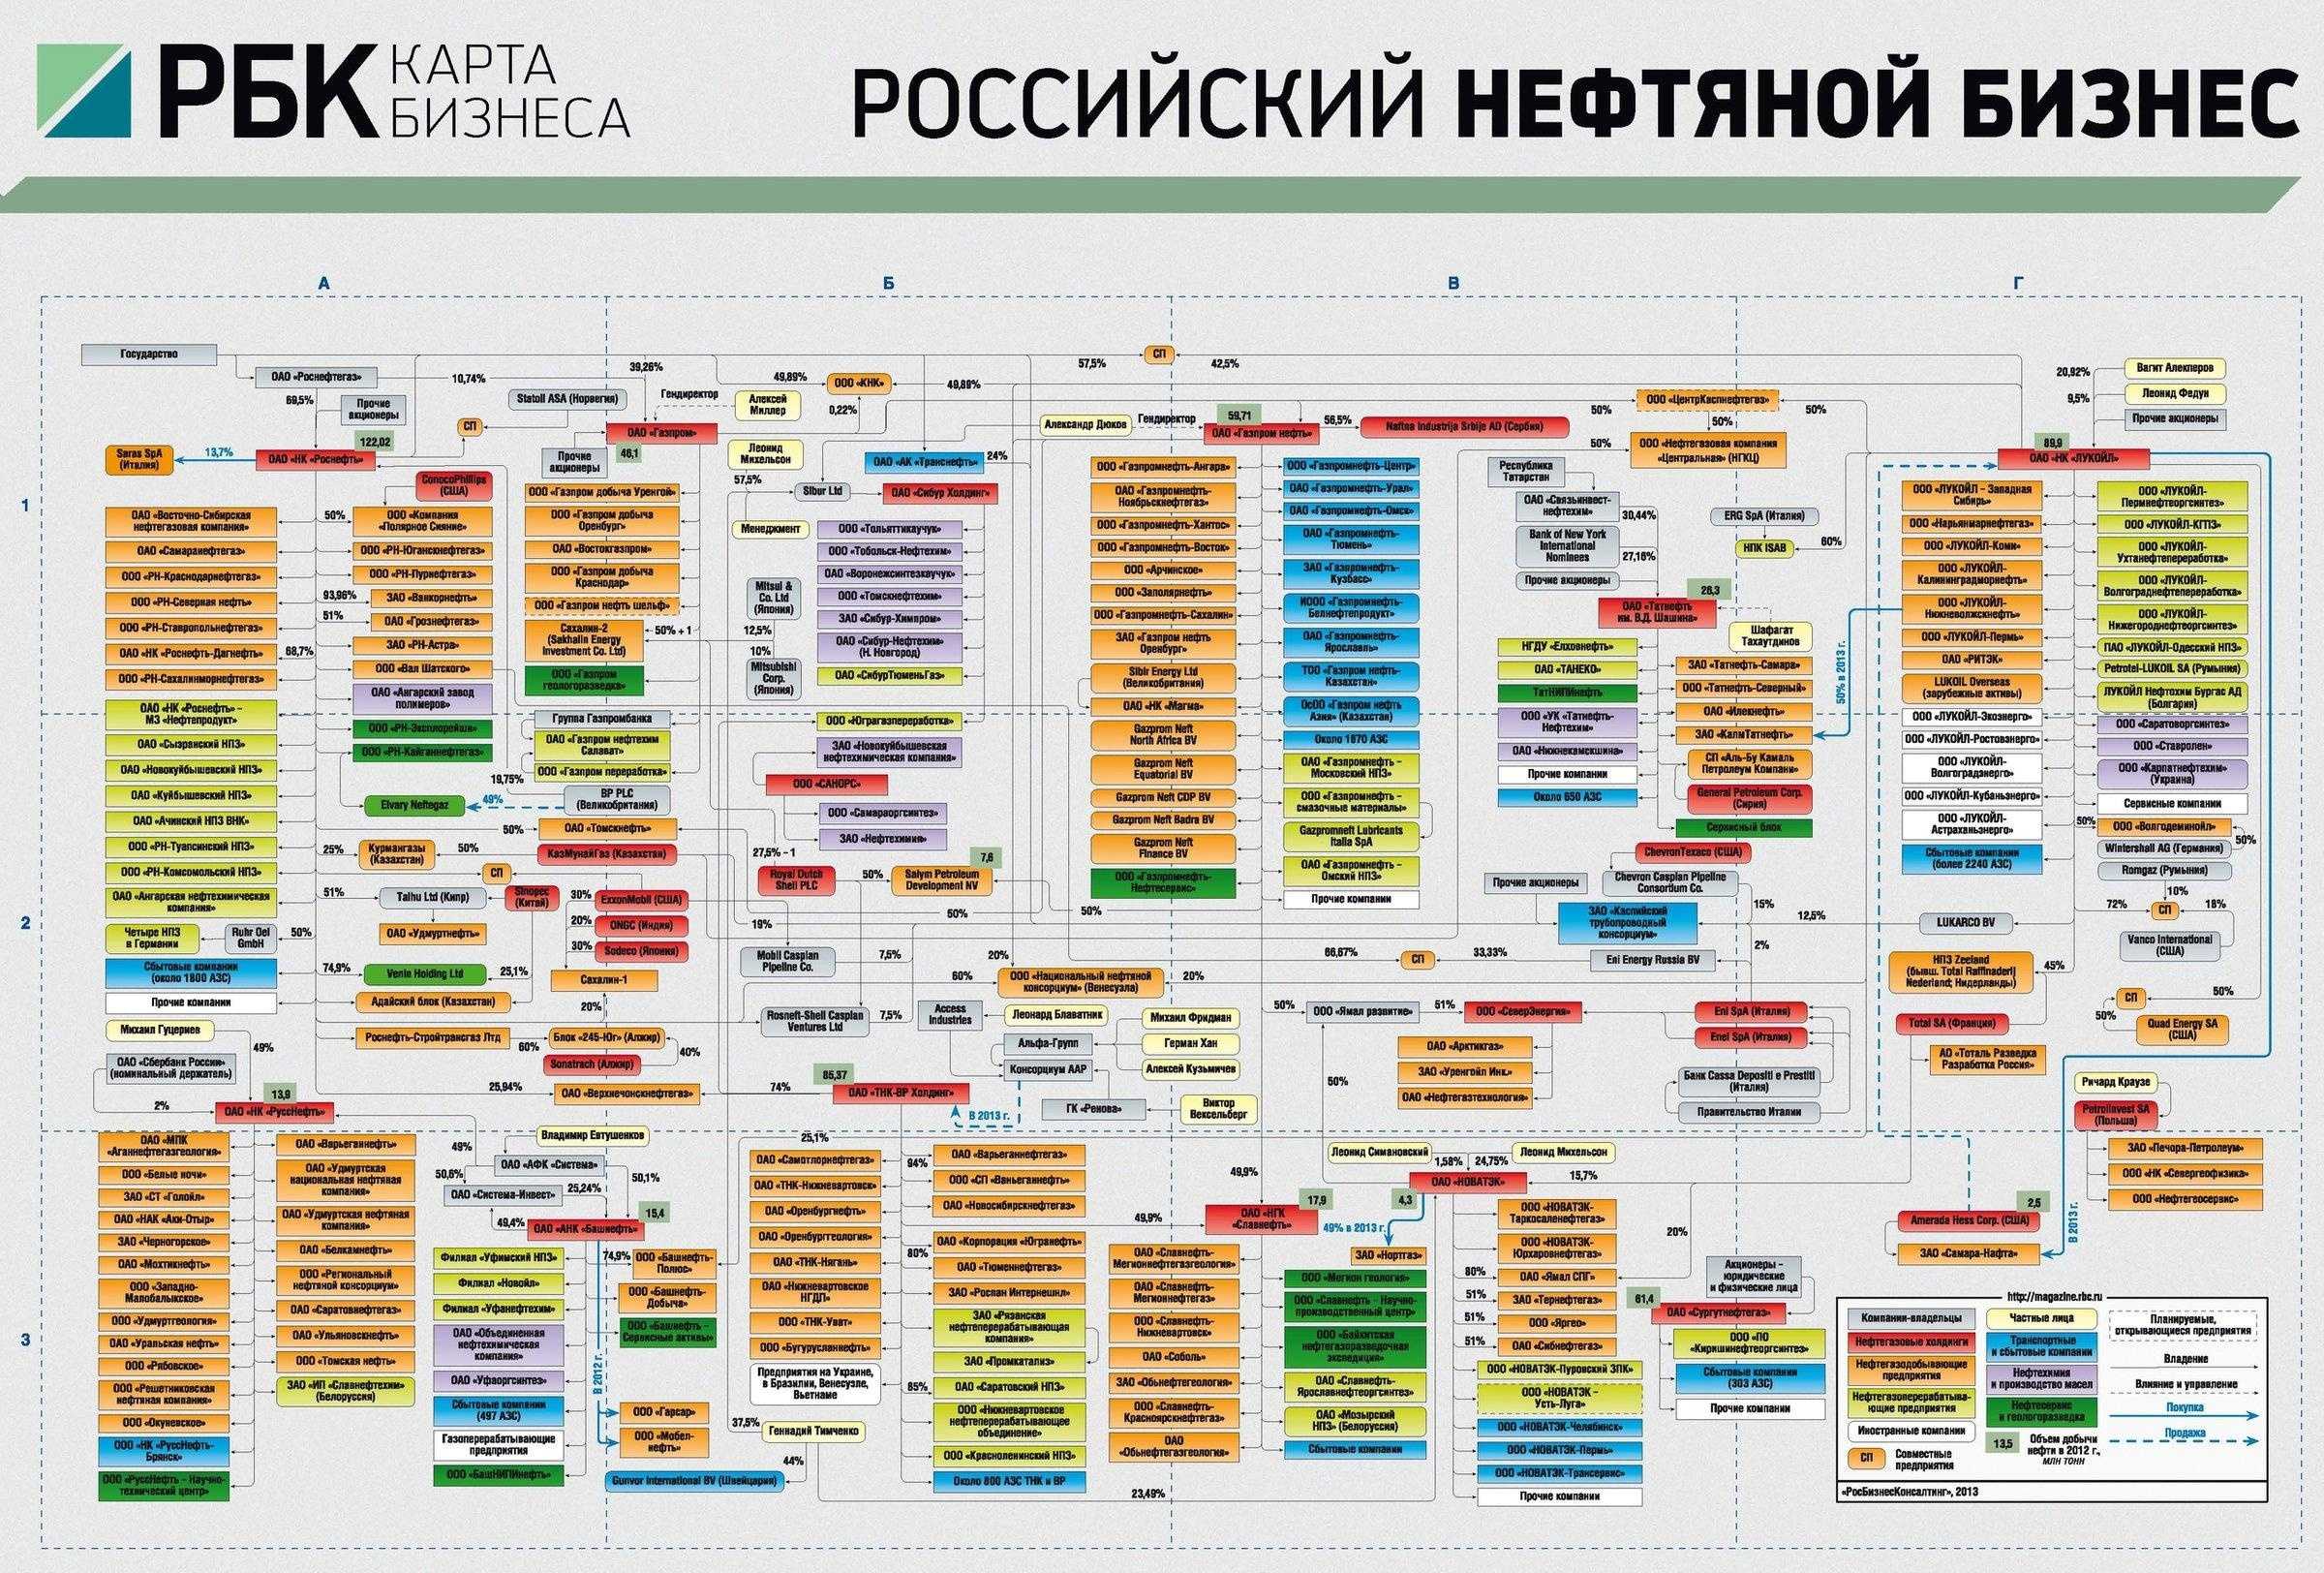 Бизнес карта вход. РБК карта бизнеса кто владеет Россией. РБК карта бизнеса. Карта российского бизнеса РБК. Кто владеет Россией.